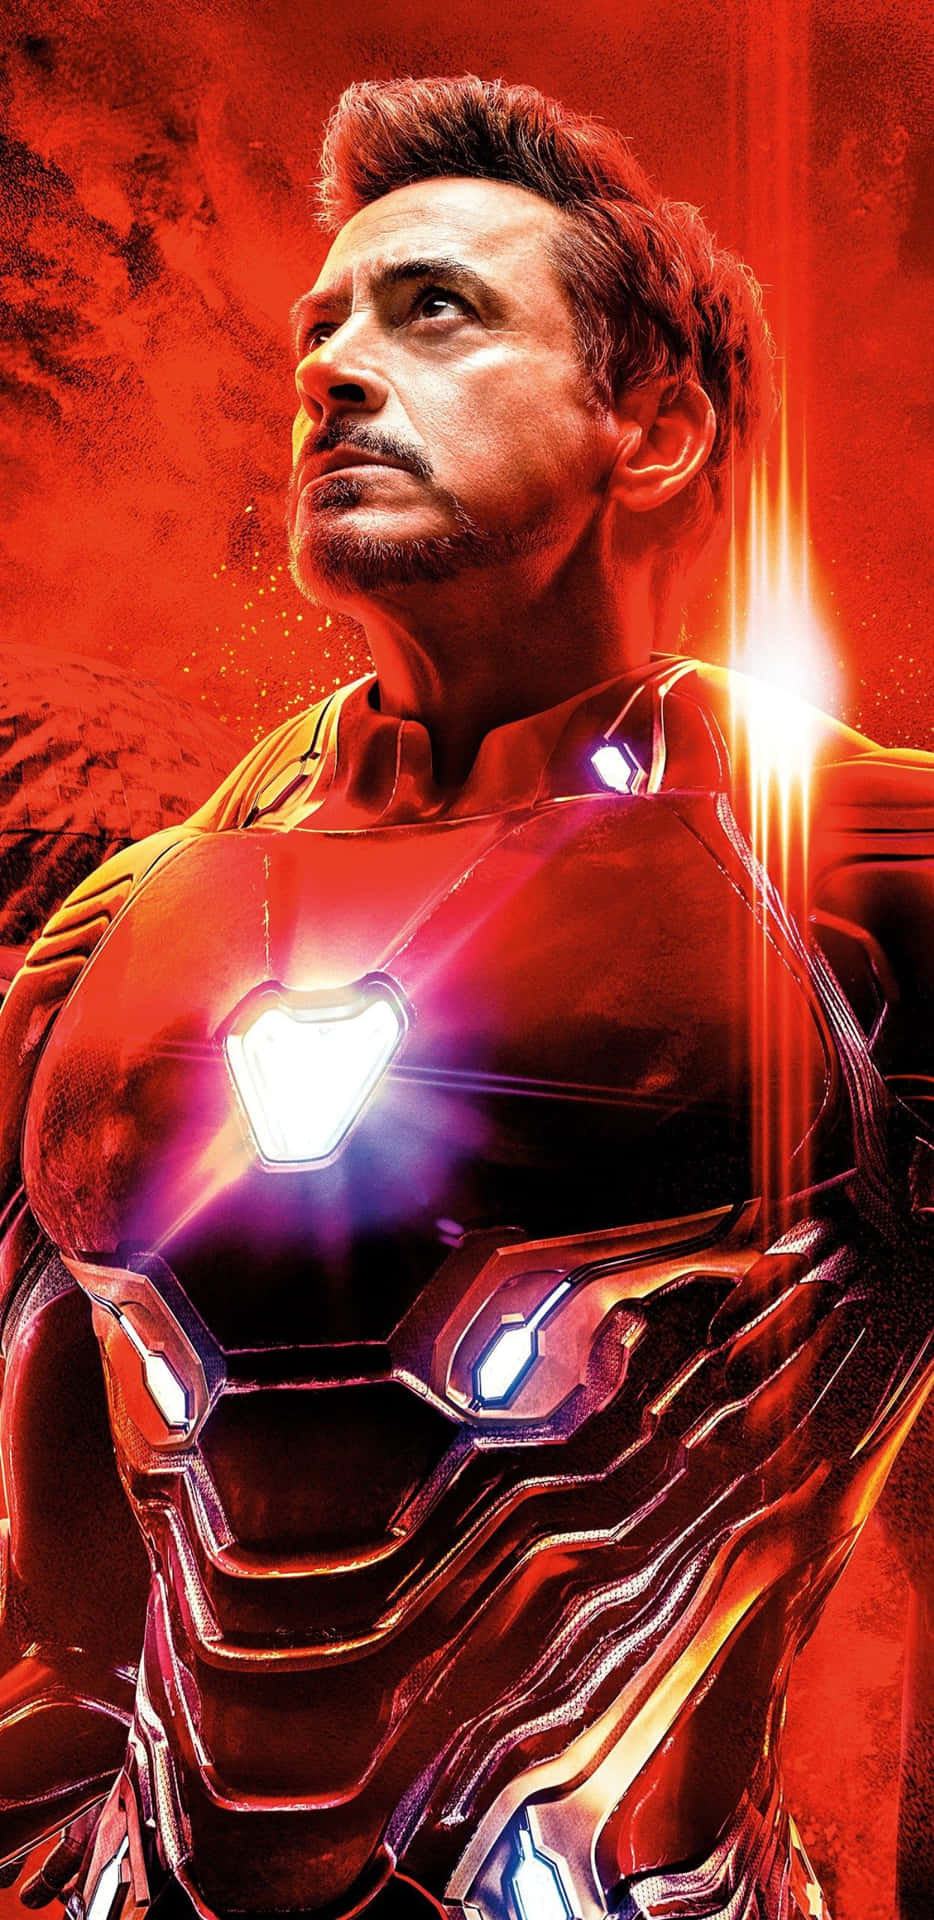 Fondode Pantalla Pixel 3xl Con La Máscara De Iron Man Fuera